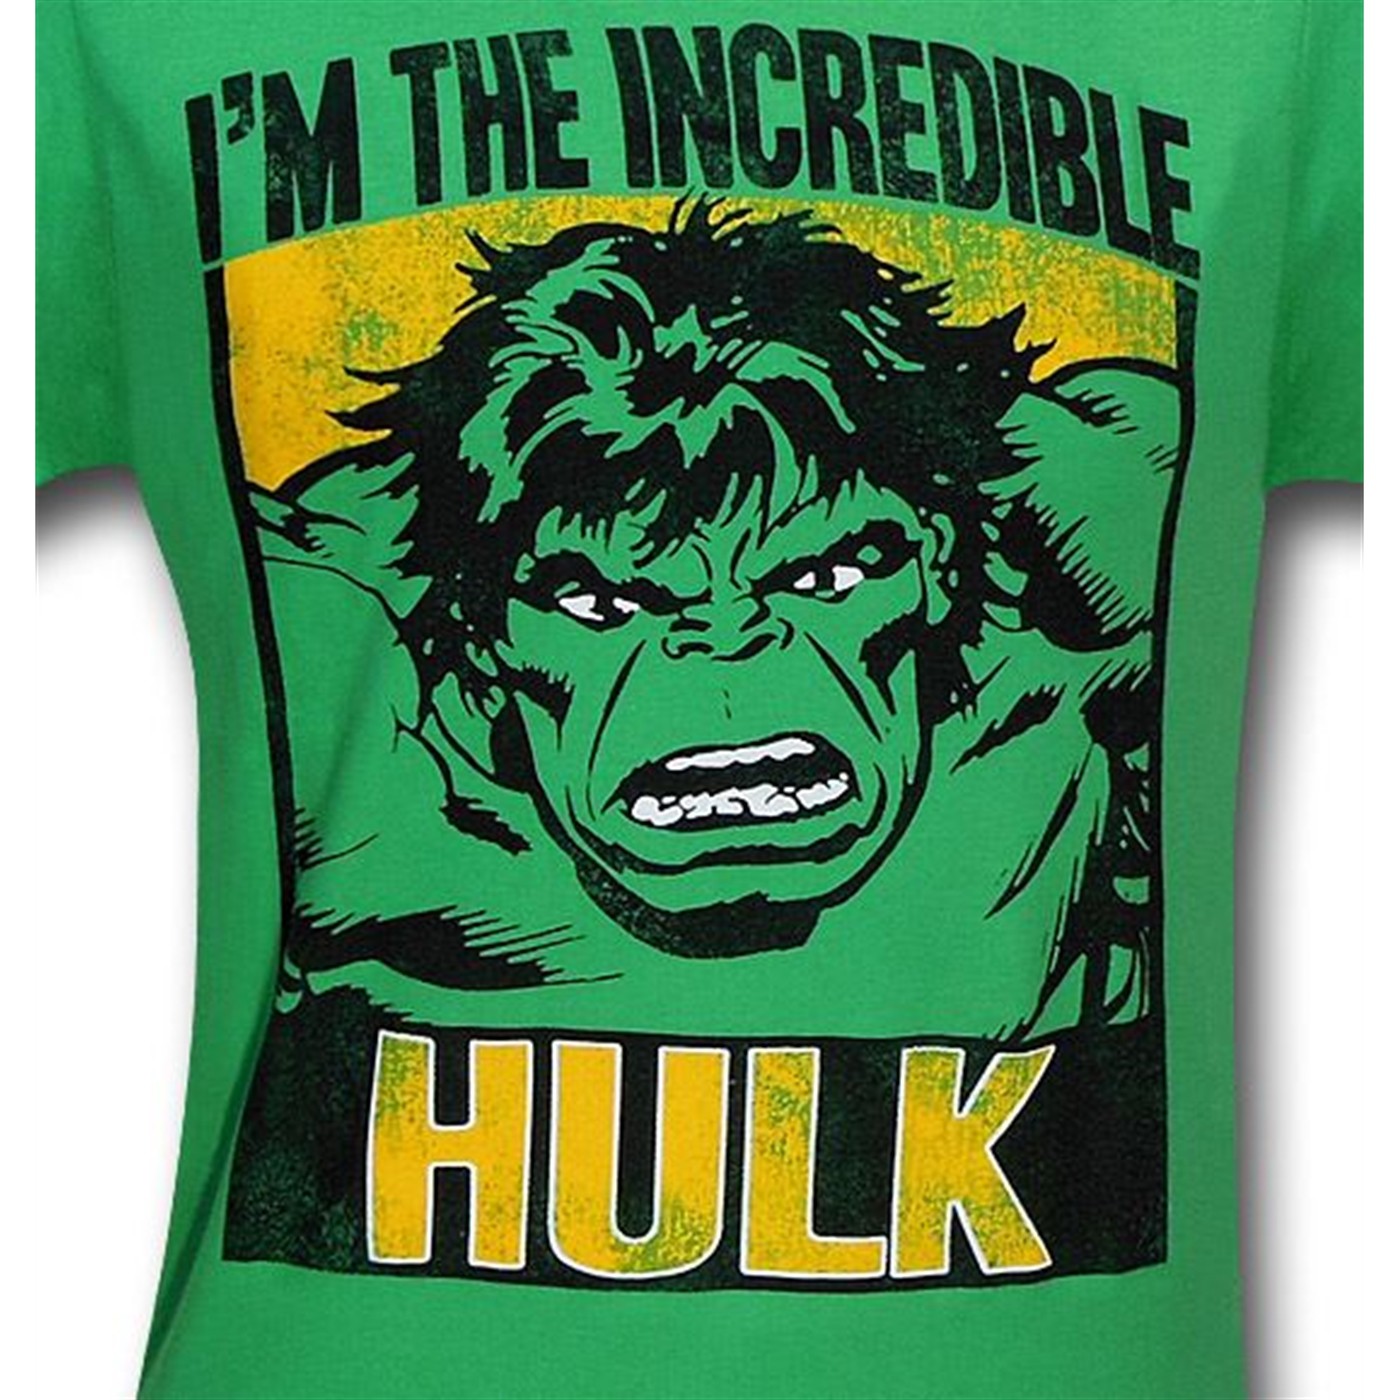 Hulk Incredible Mugshot Green 30 Single T-Shirt